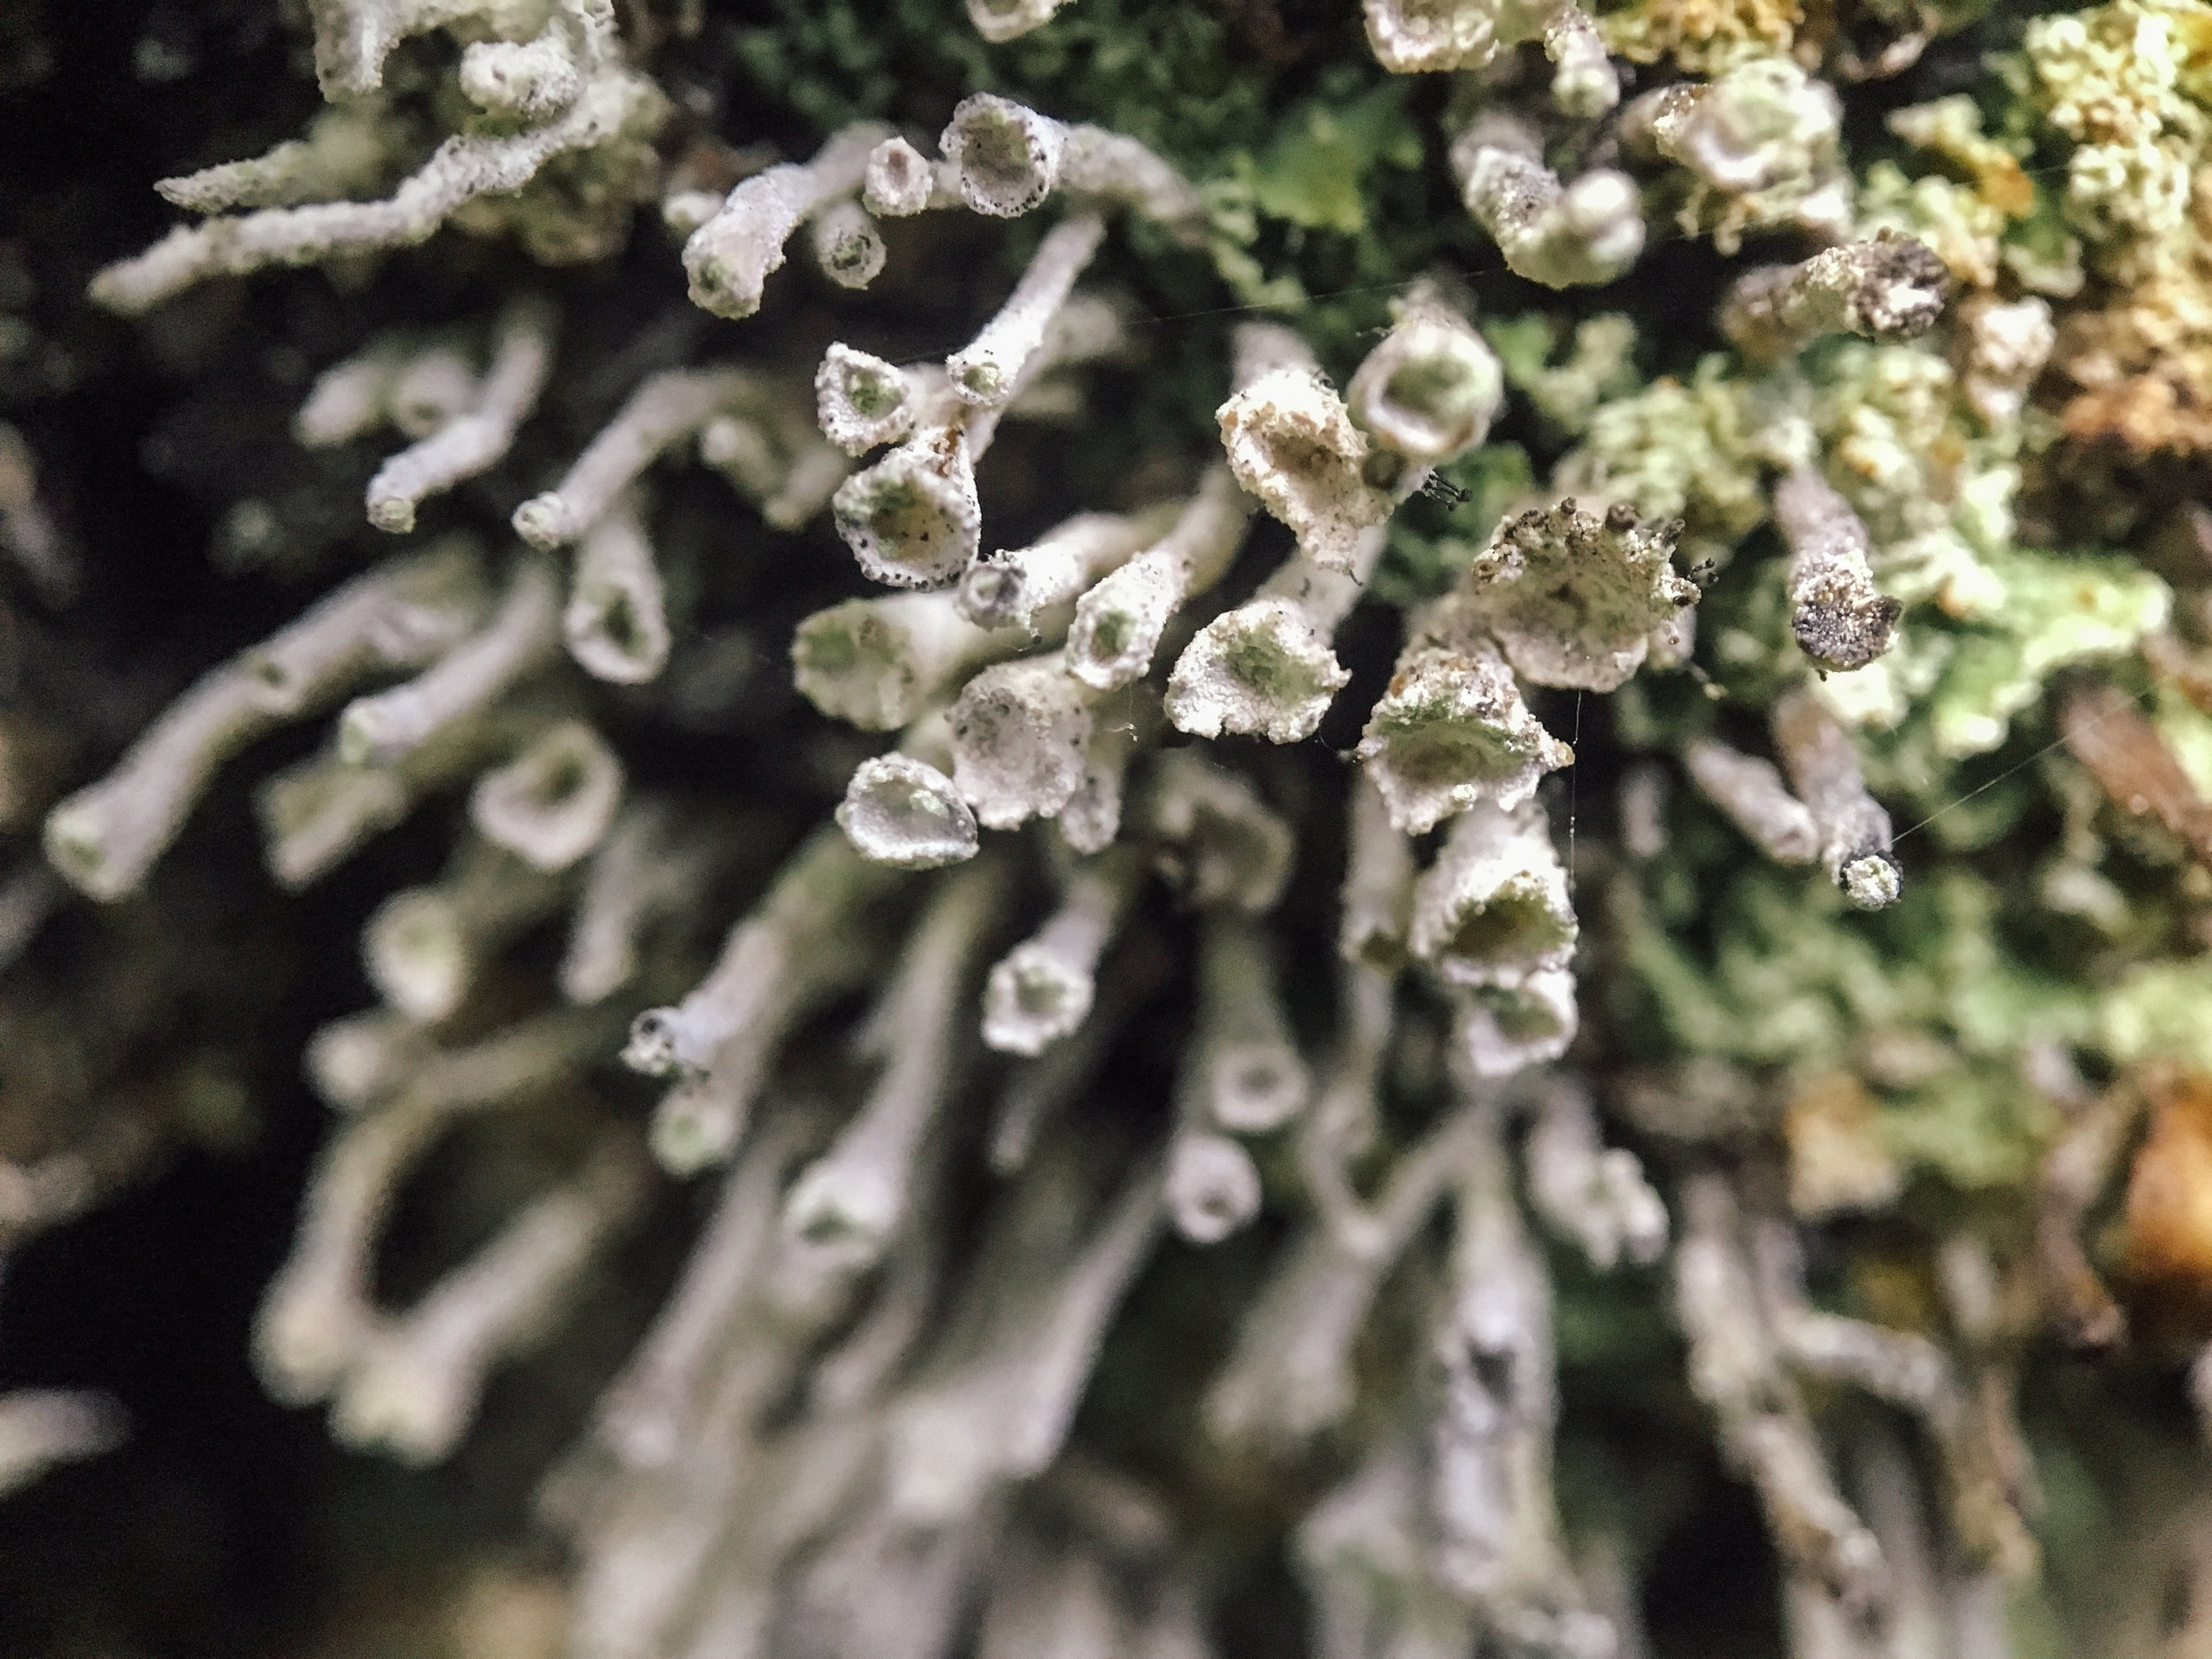 A cluster of "Cladonia" lichens, potentially the "Cladonia Fimbriata" or Trumpet Lichen type